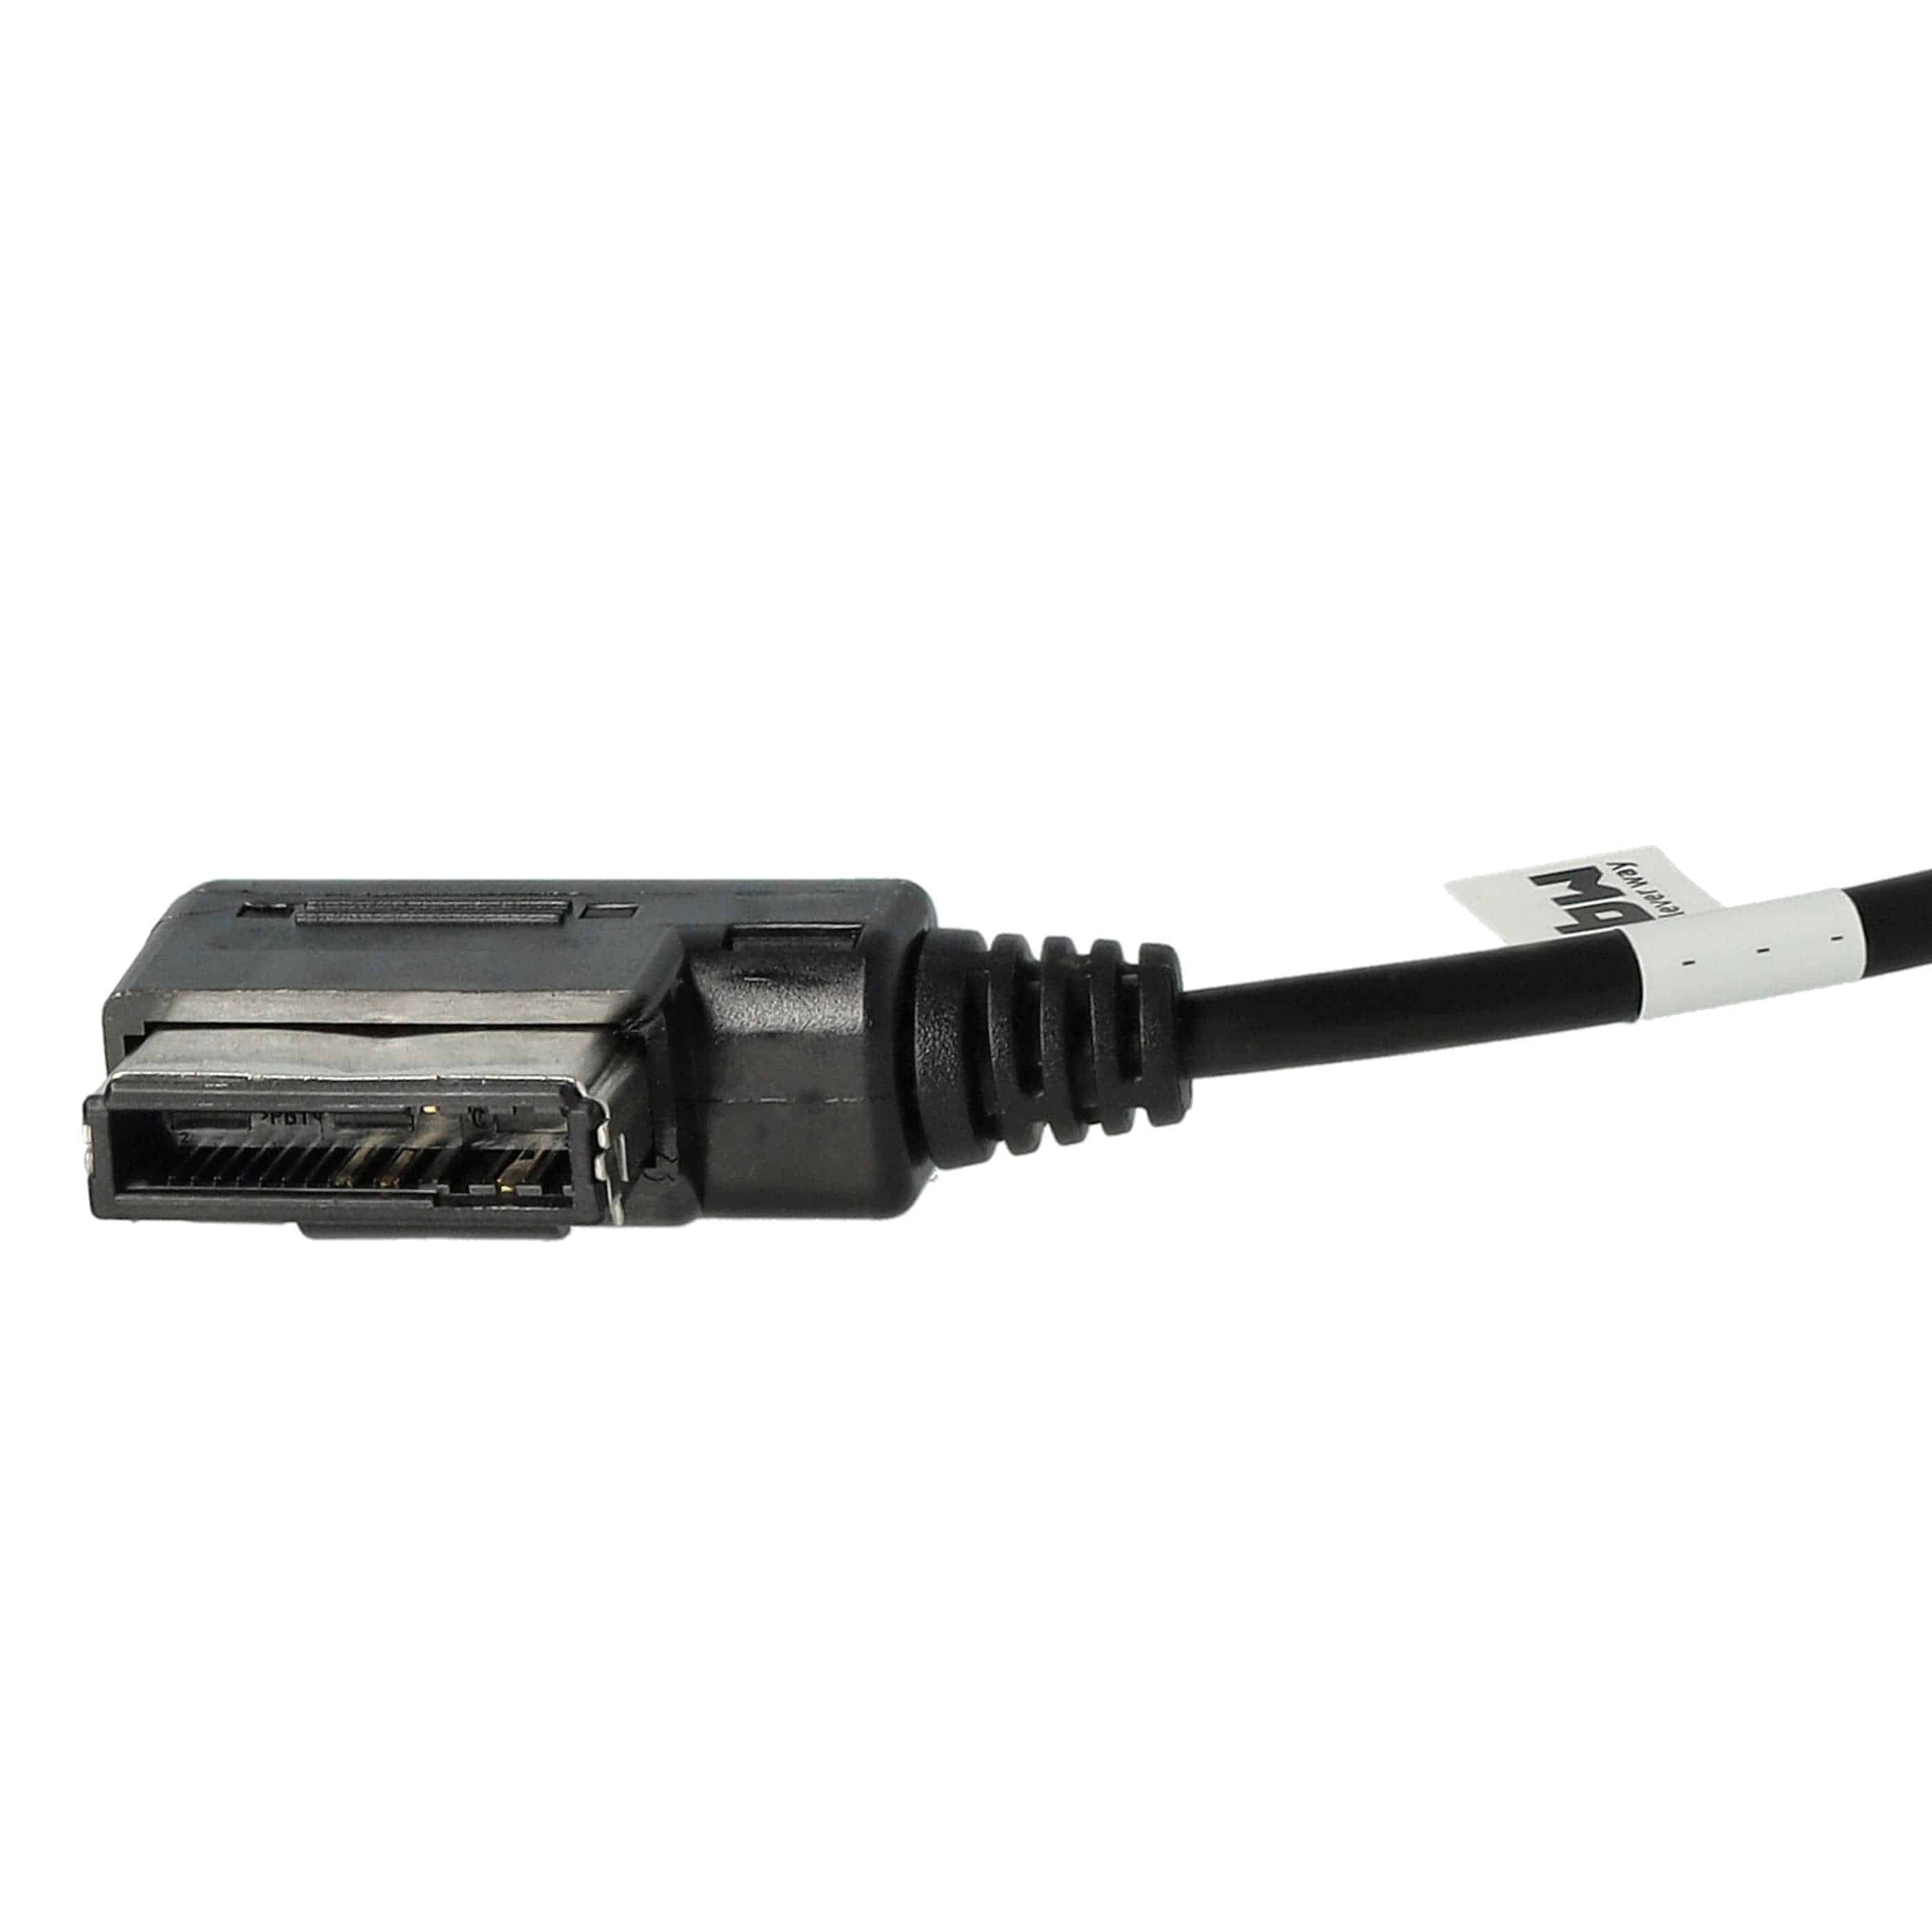 Cable audio para vehículo, etc. Audi, etc.- Adaptador USB, Longitud: 37,1 cm